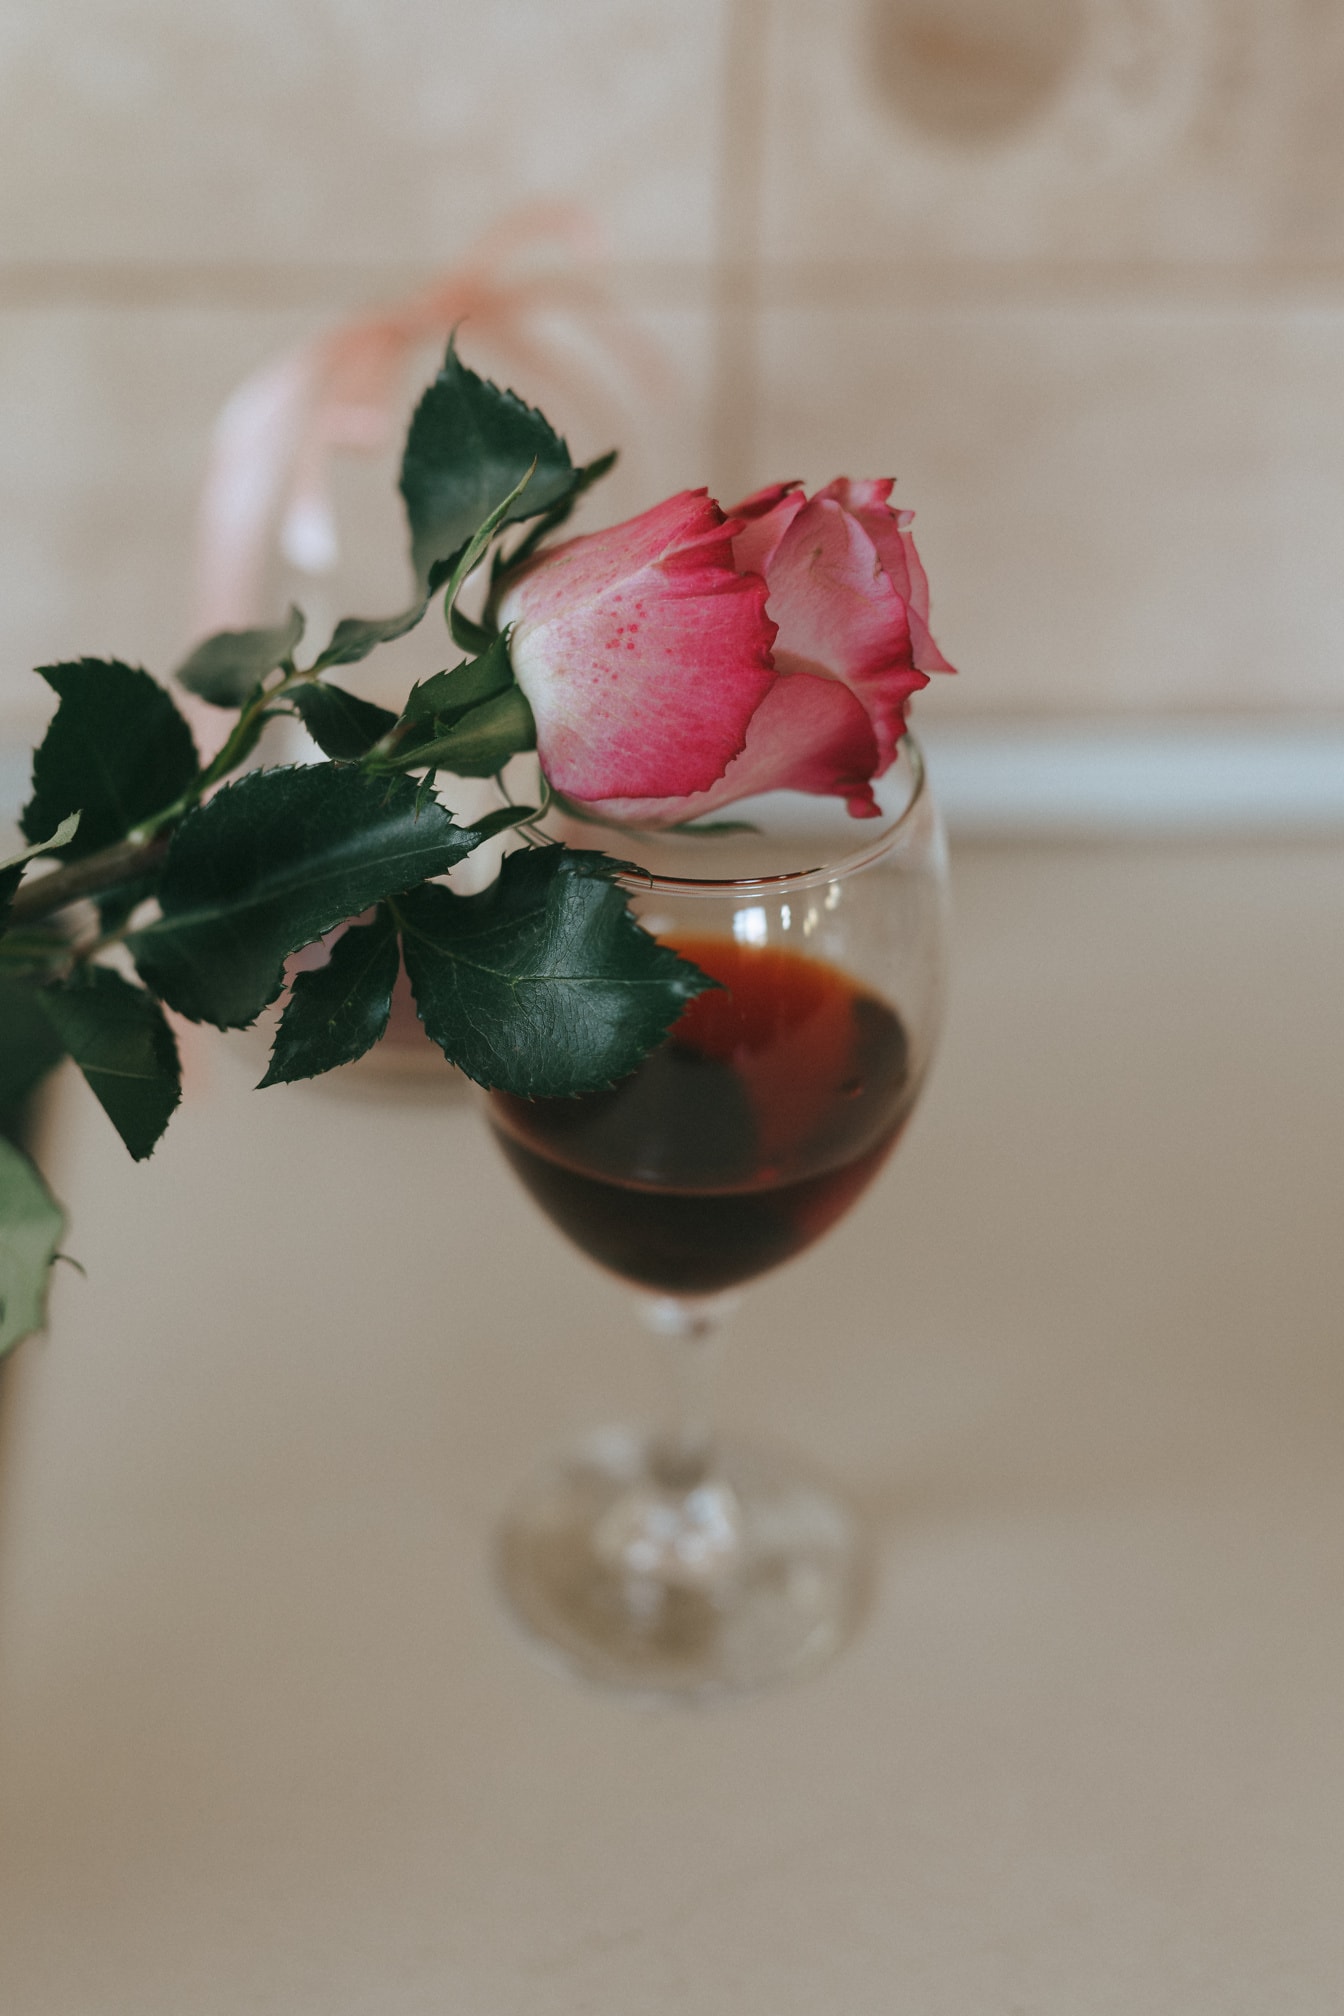 Capullo de rosa rosa en una copa de vino tinto foto de primer plano